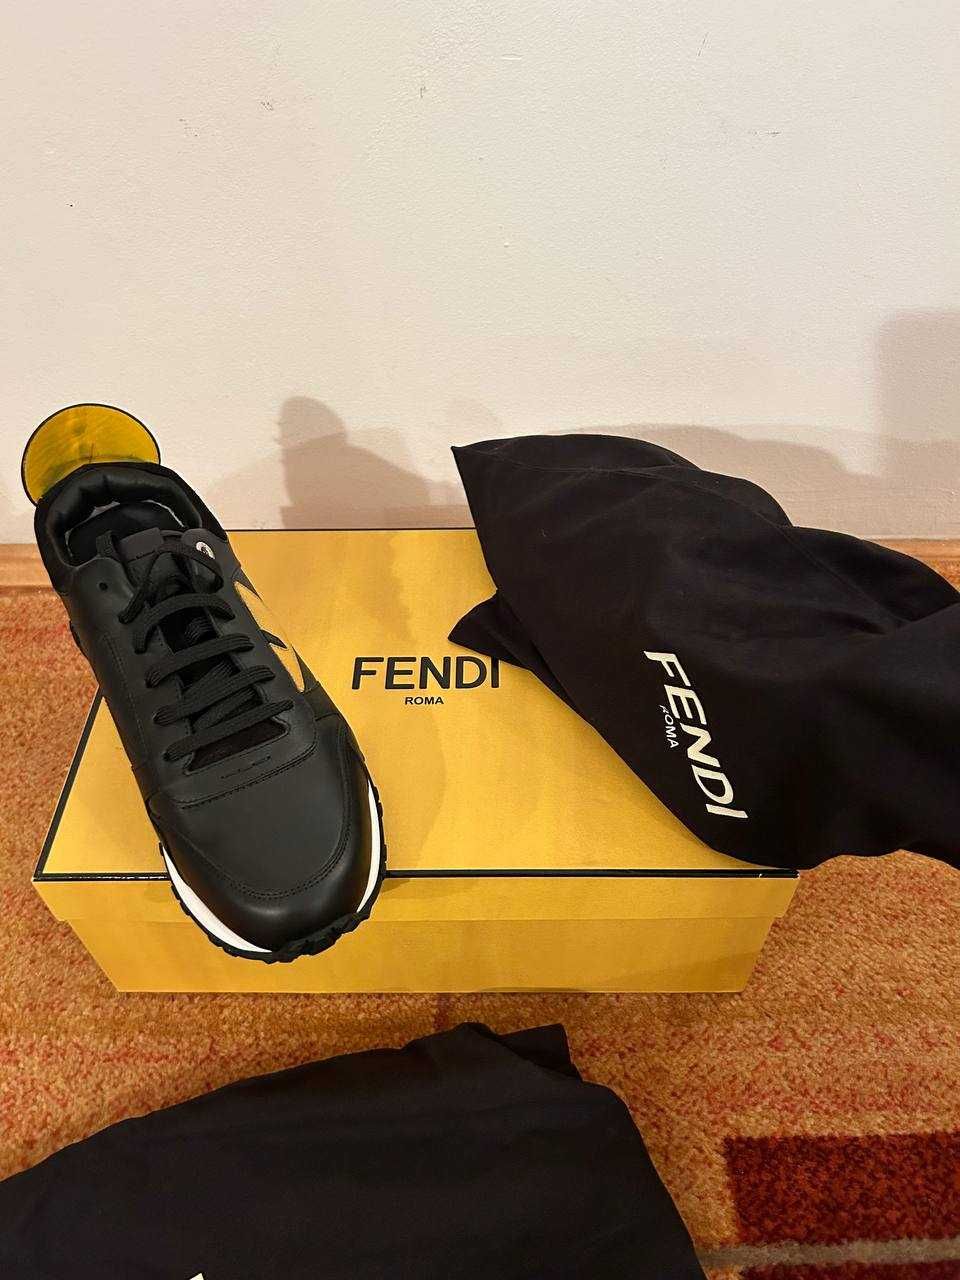 Fendi Monster sneakers